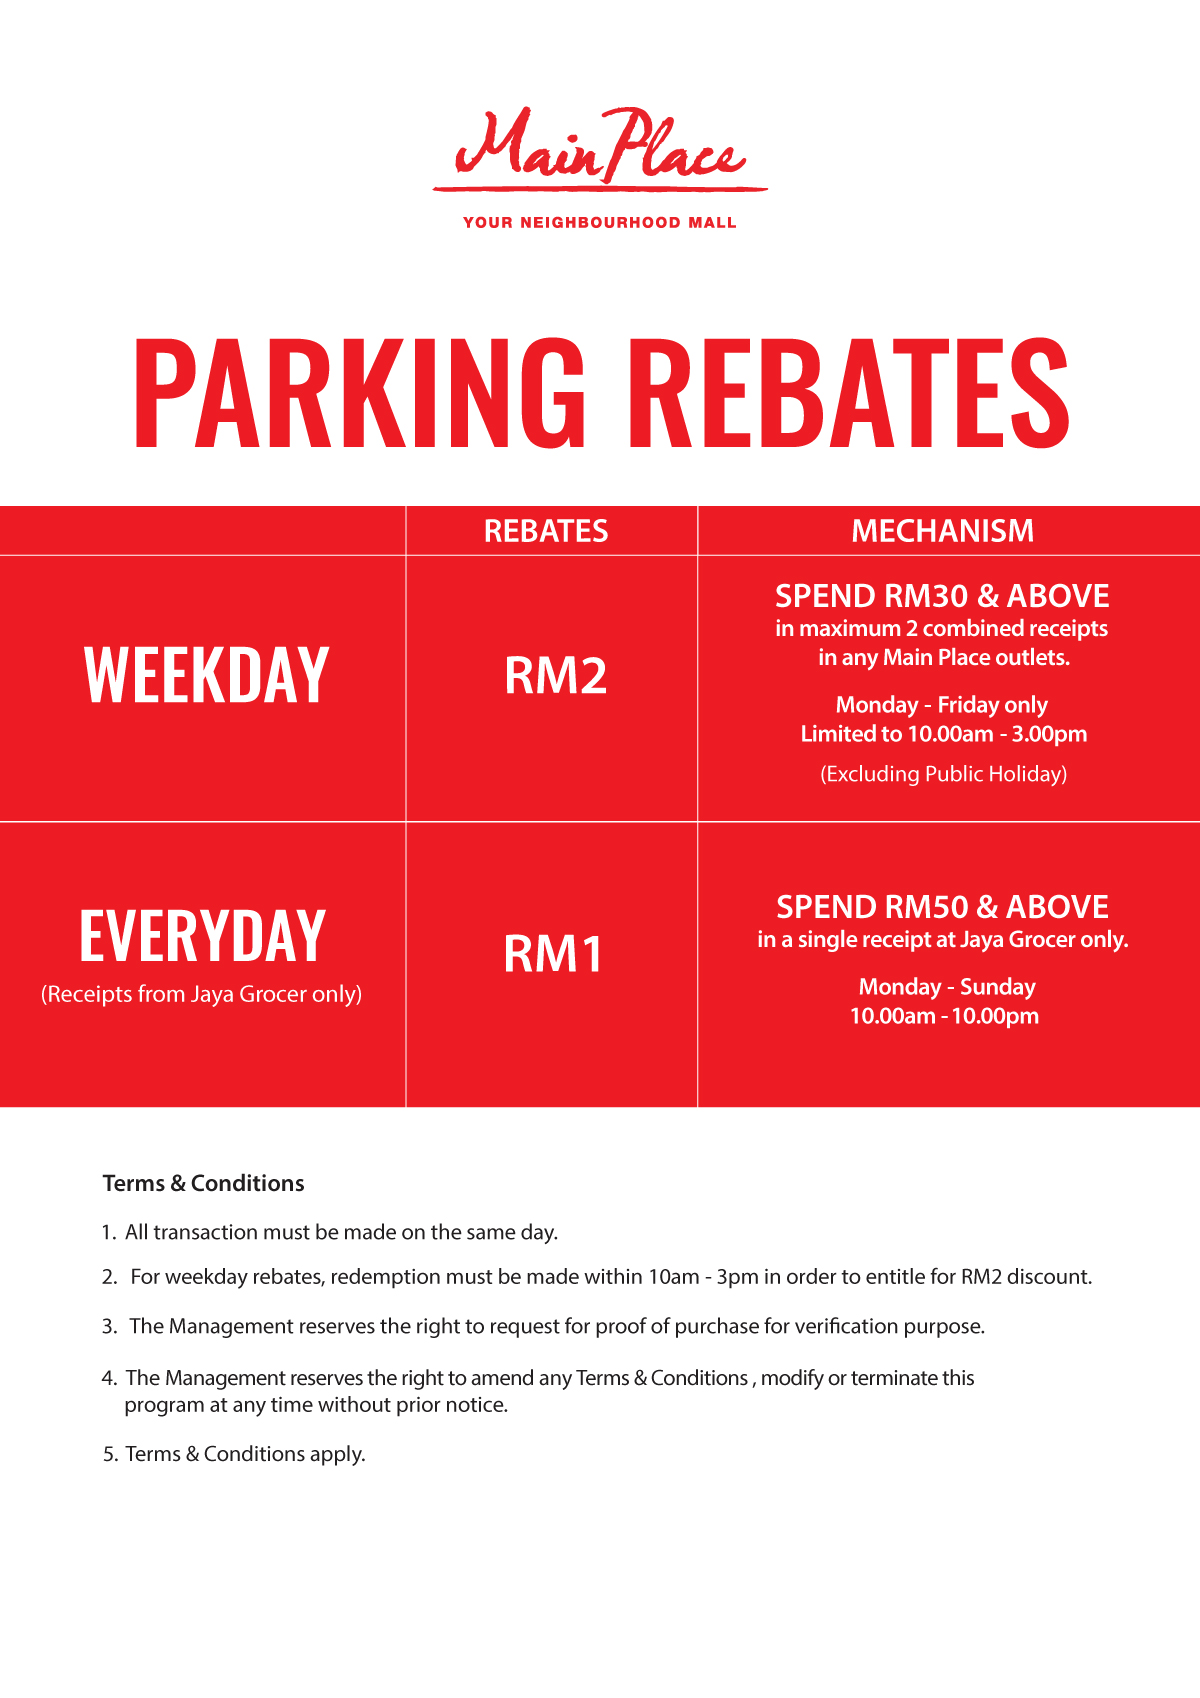 weekday-parking-rebate-main-place-mall